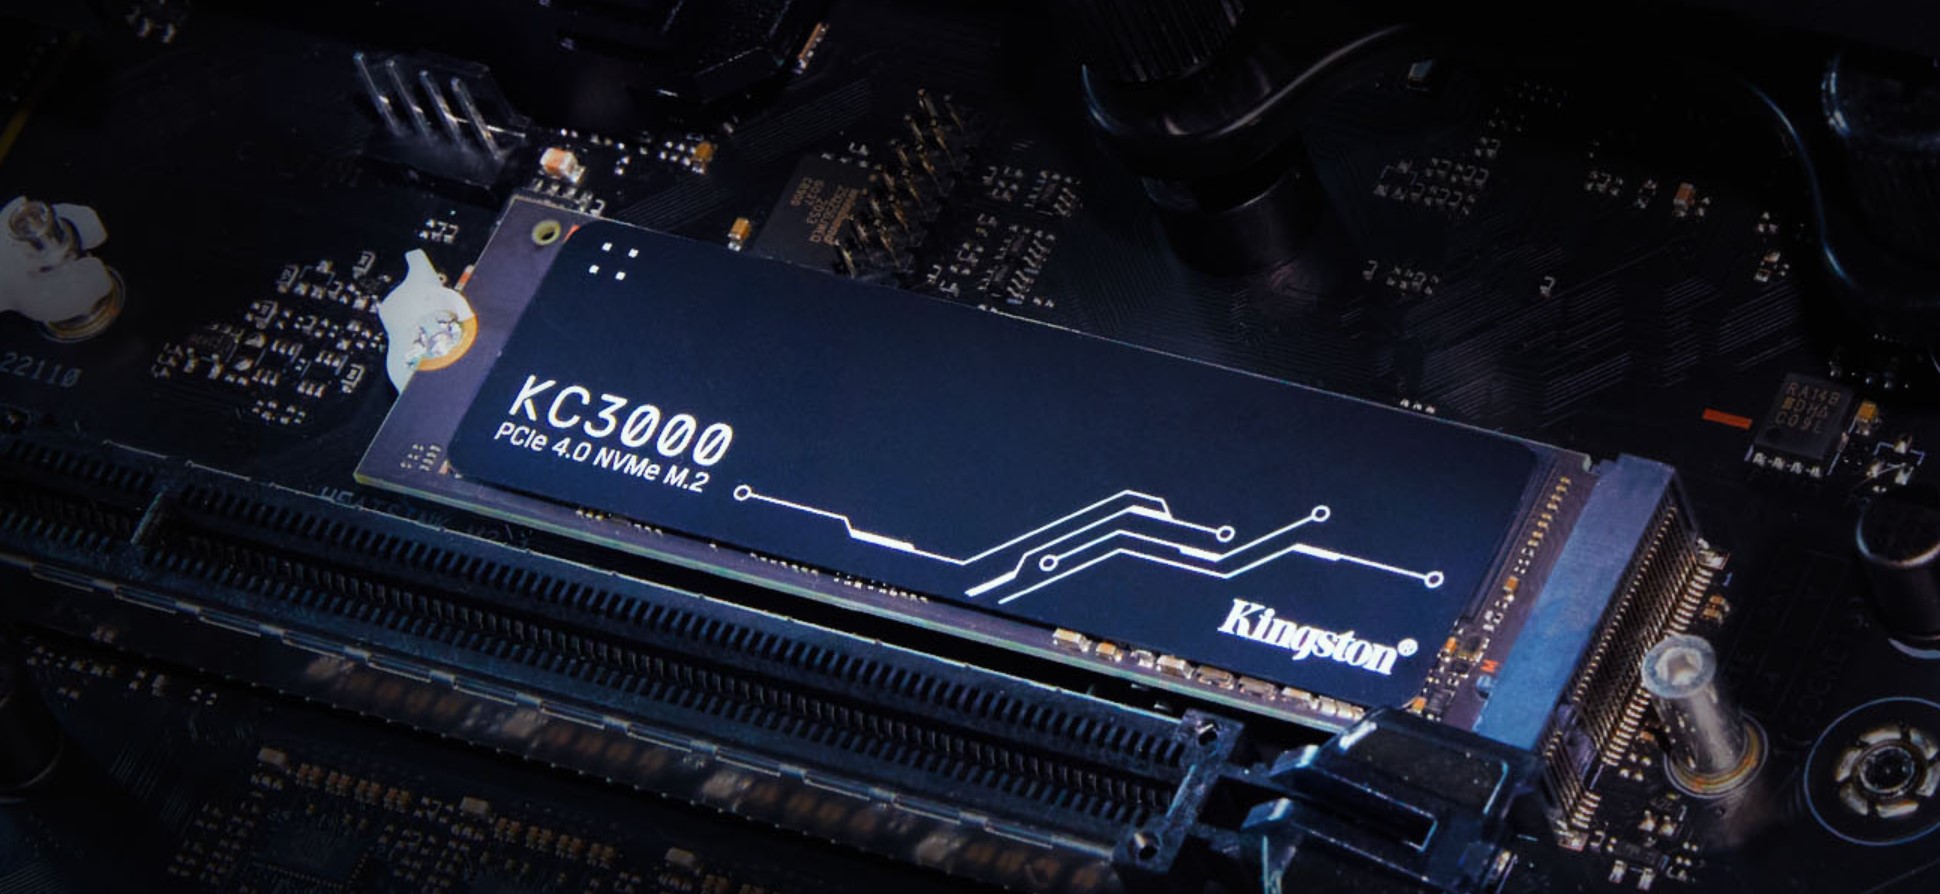 KC3000 PCIe 4.0 NVMe M.2 SSD High-performance for desktop and laptop PCs -  Kingston Technology